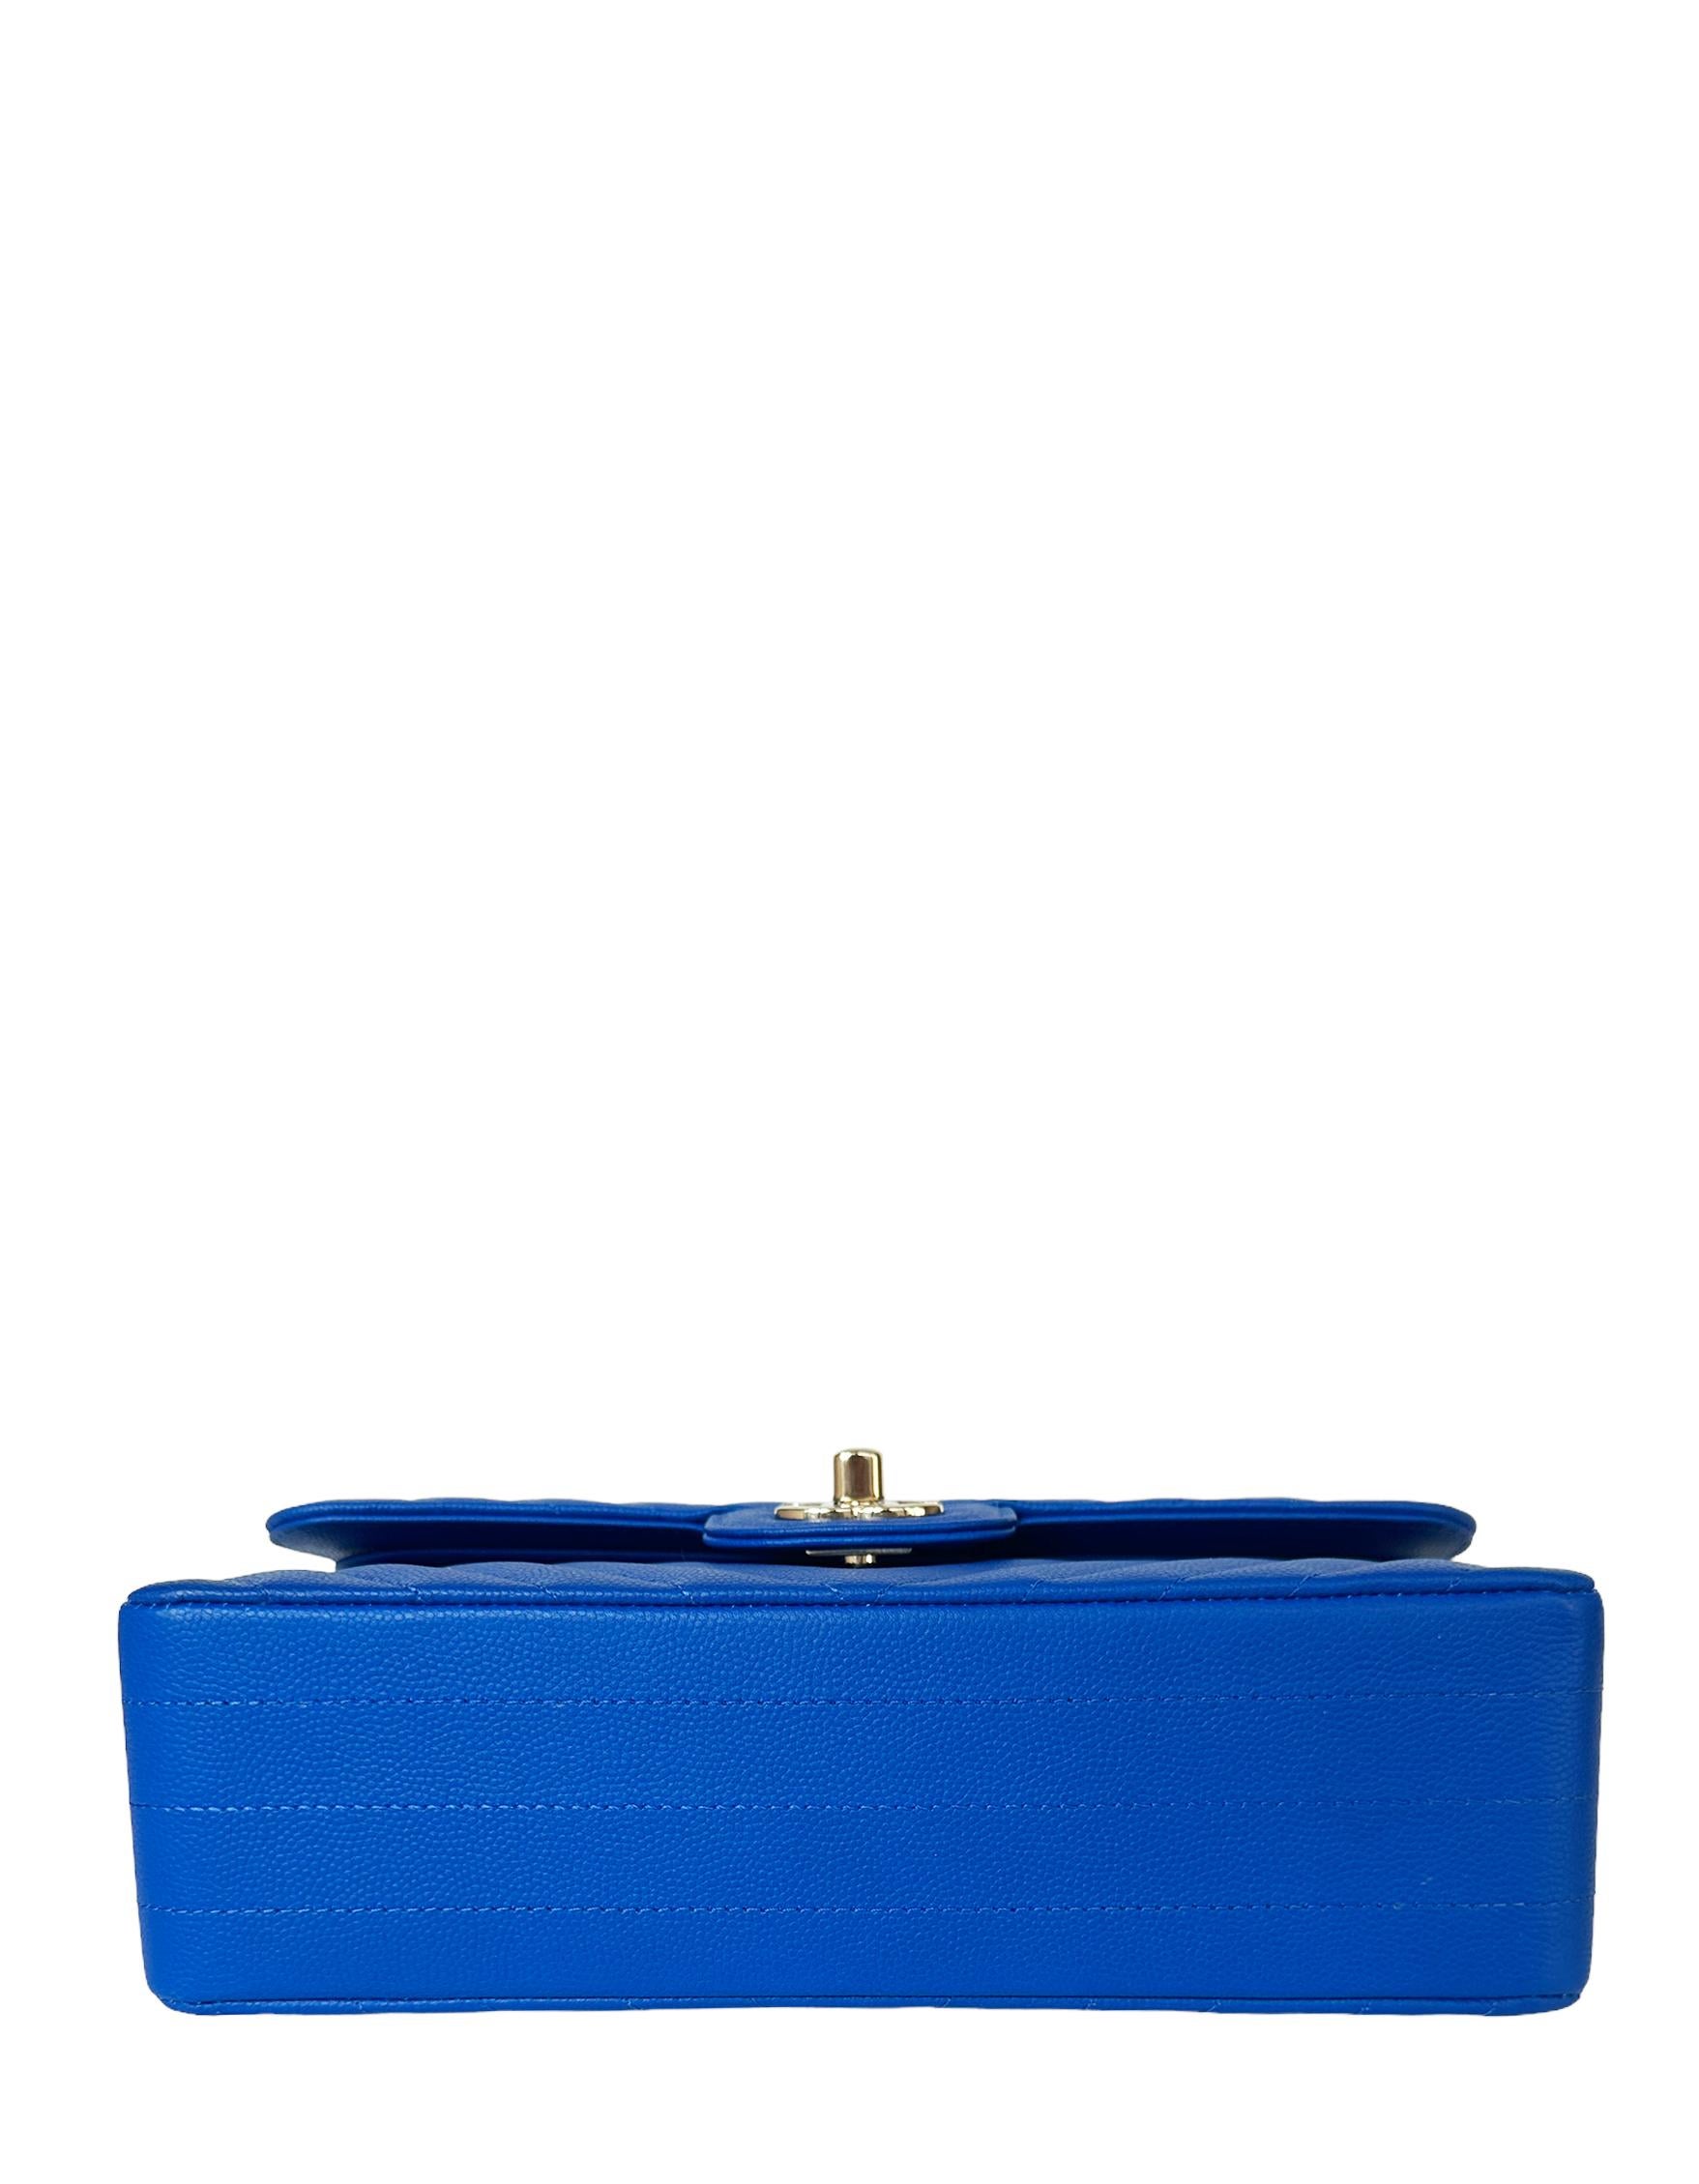 Women's Chanel Cobalt Blue Caviar Leather Chevron Small Double Flap Classic Bag For Sale